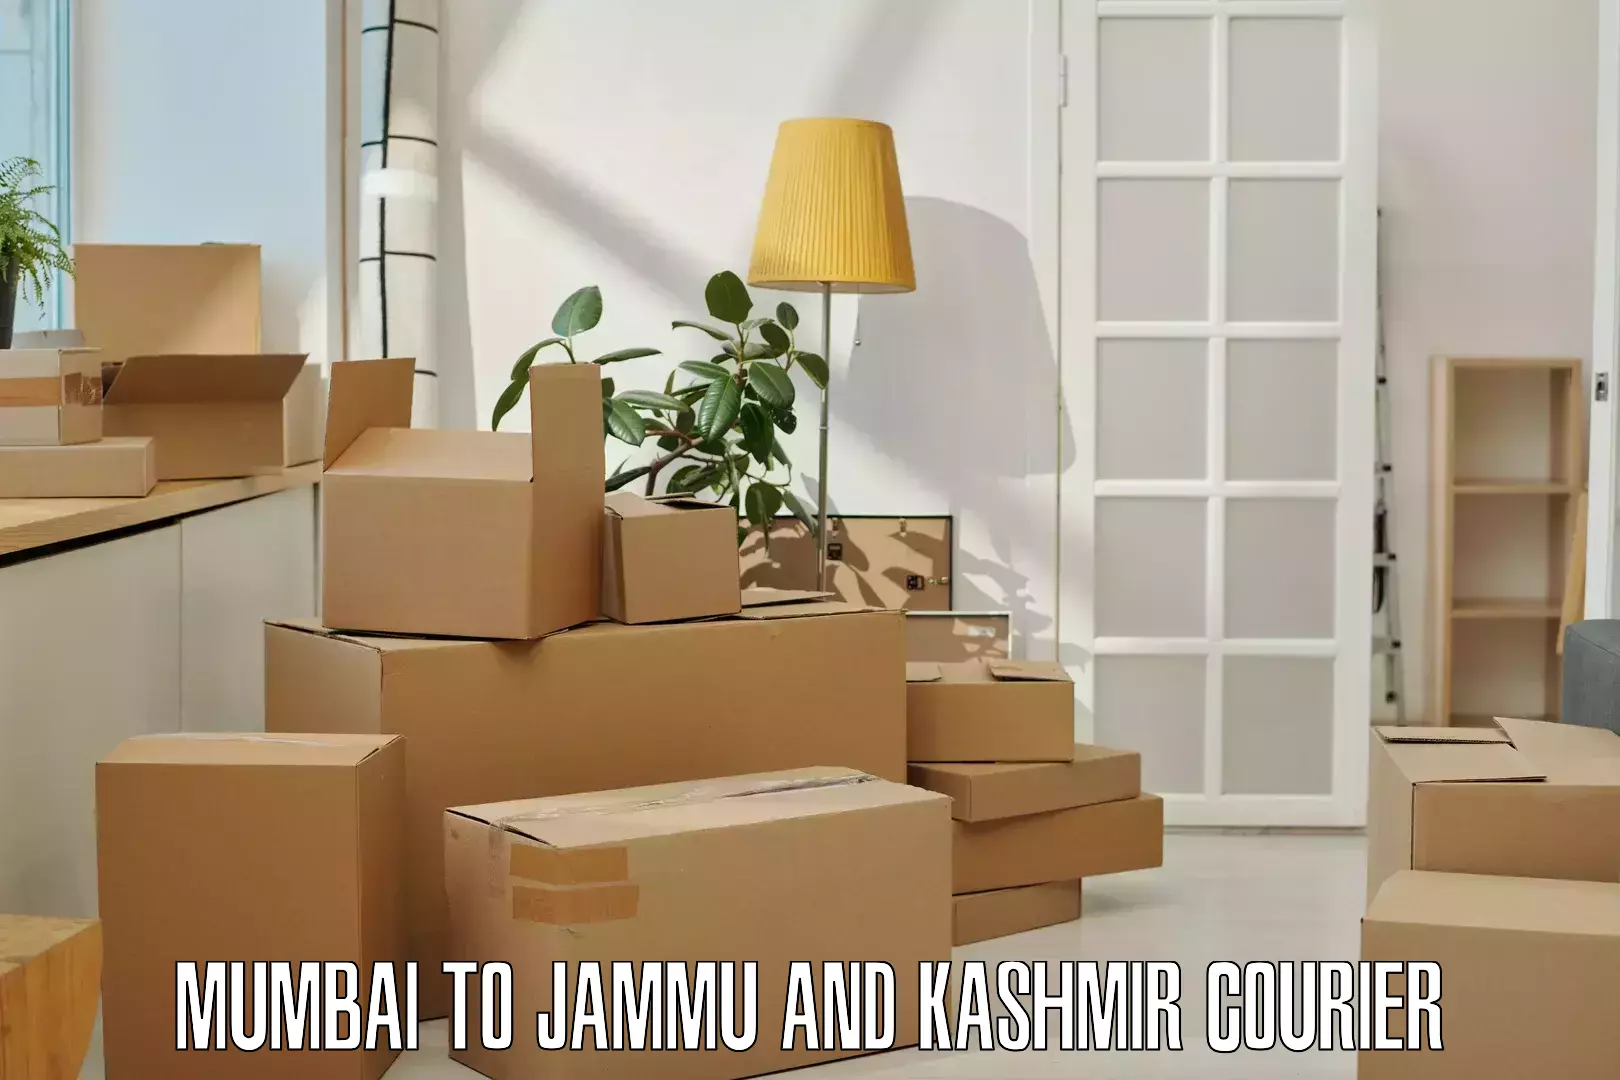 Express mail service in Mumbai to Jammu